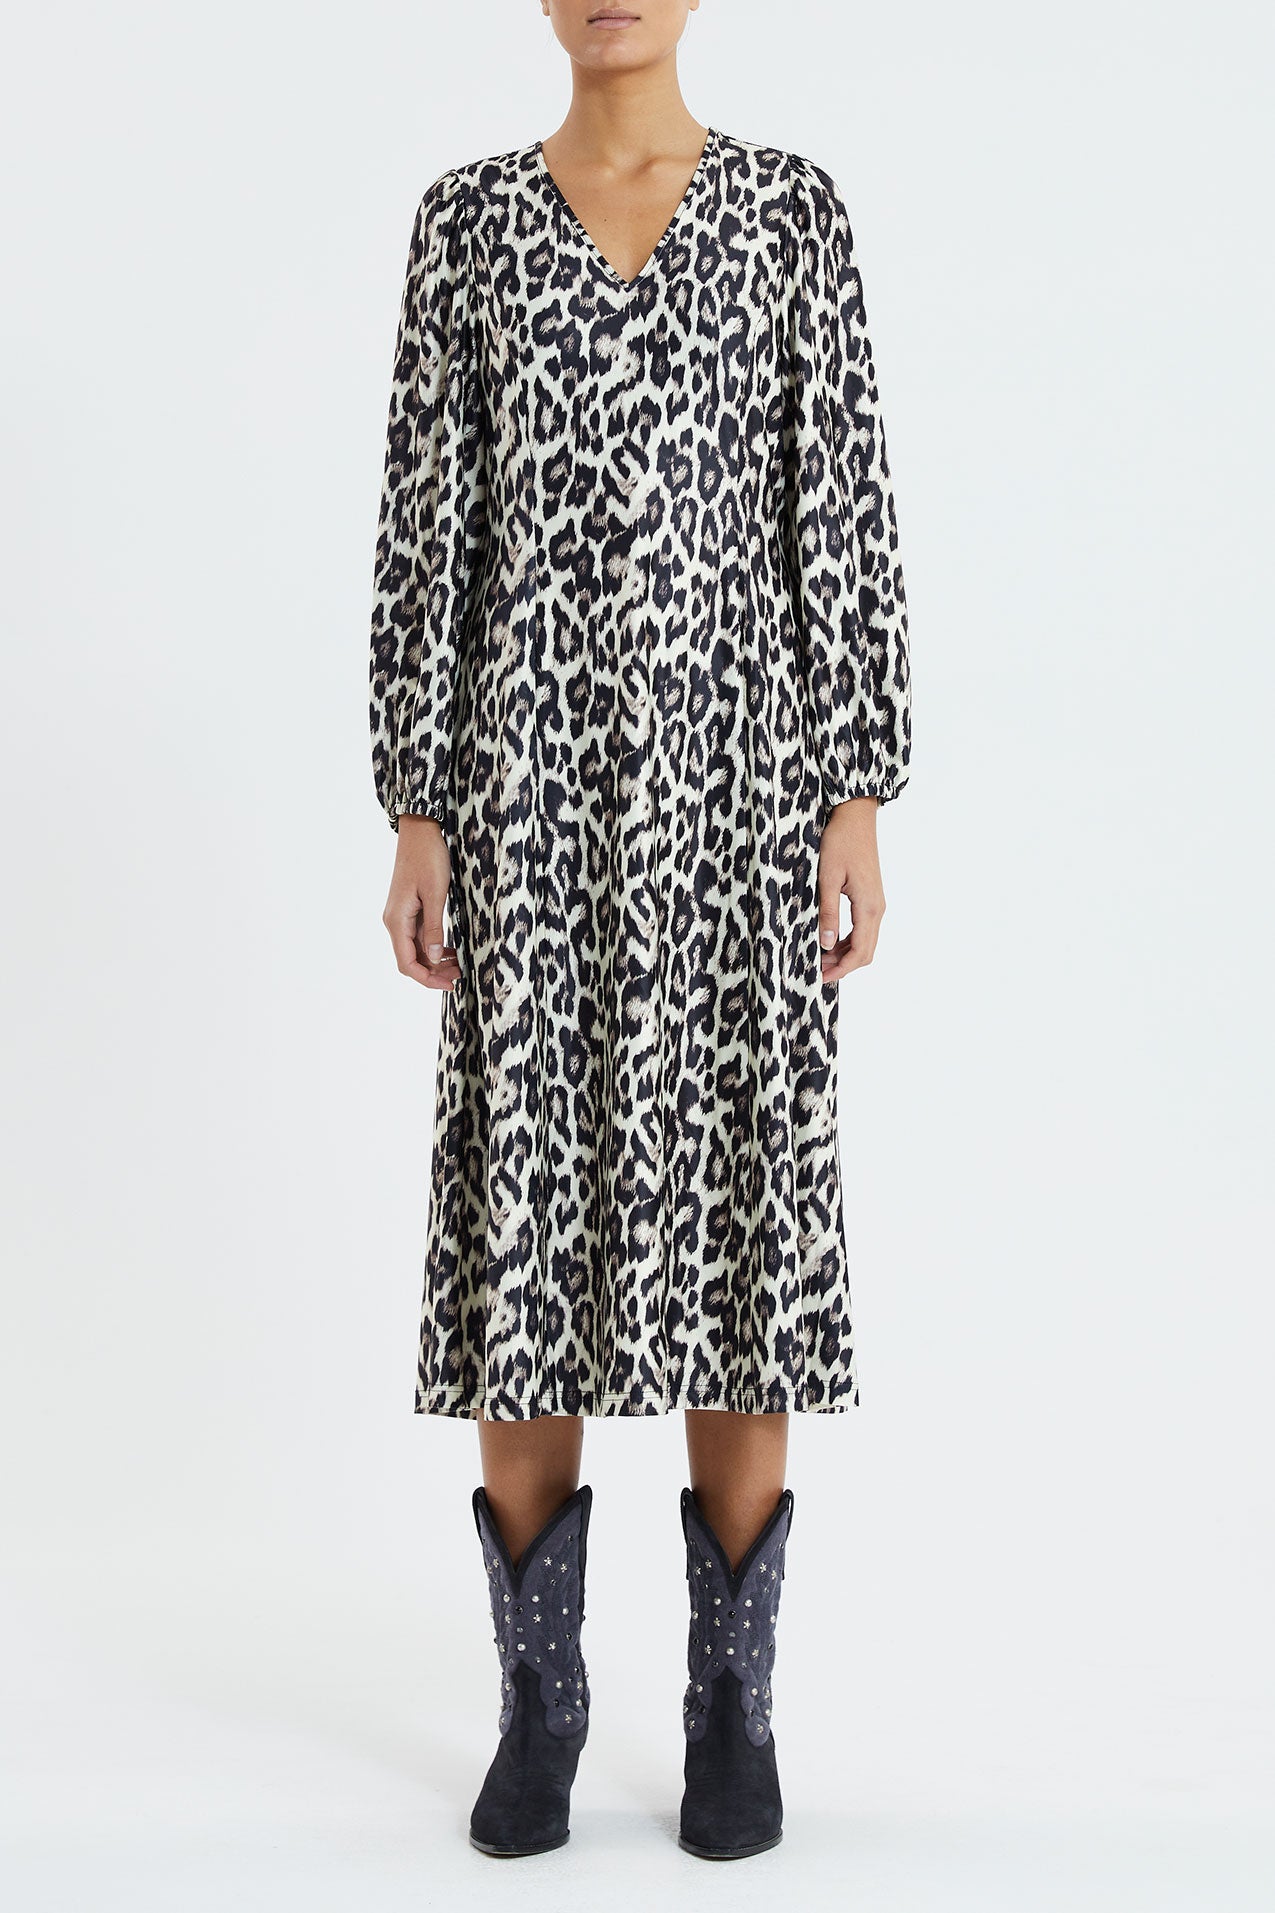 Lollys Laundry Lake Dress Dress 72 Leopard Print